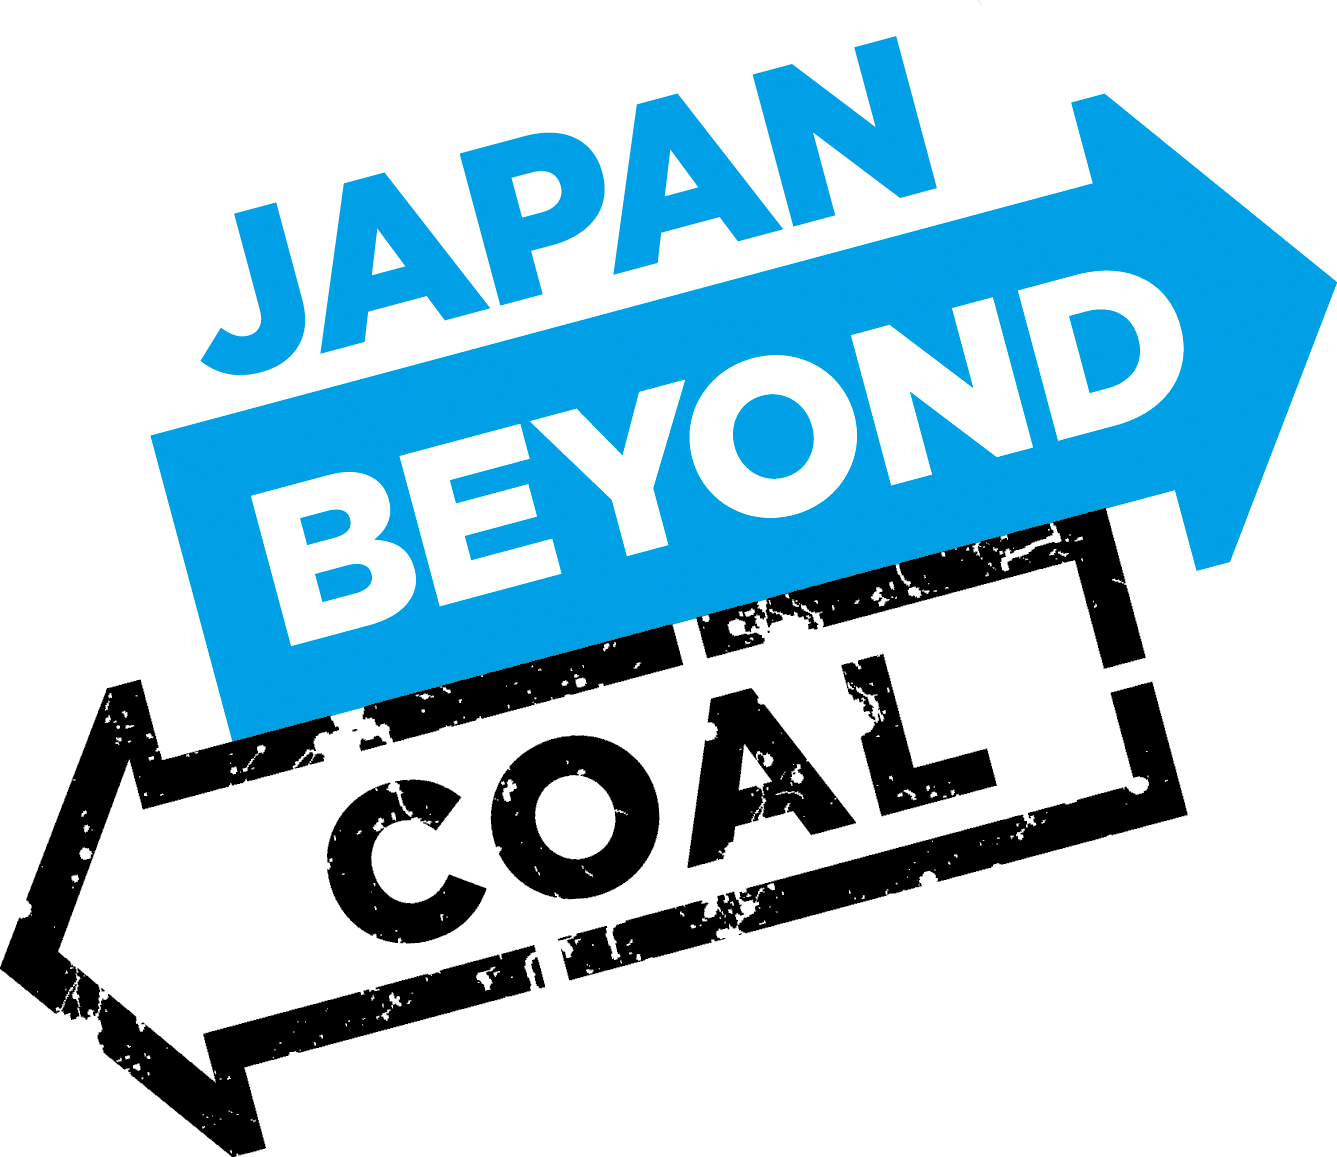 Japan Beyond Coal